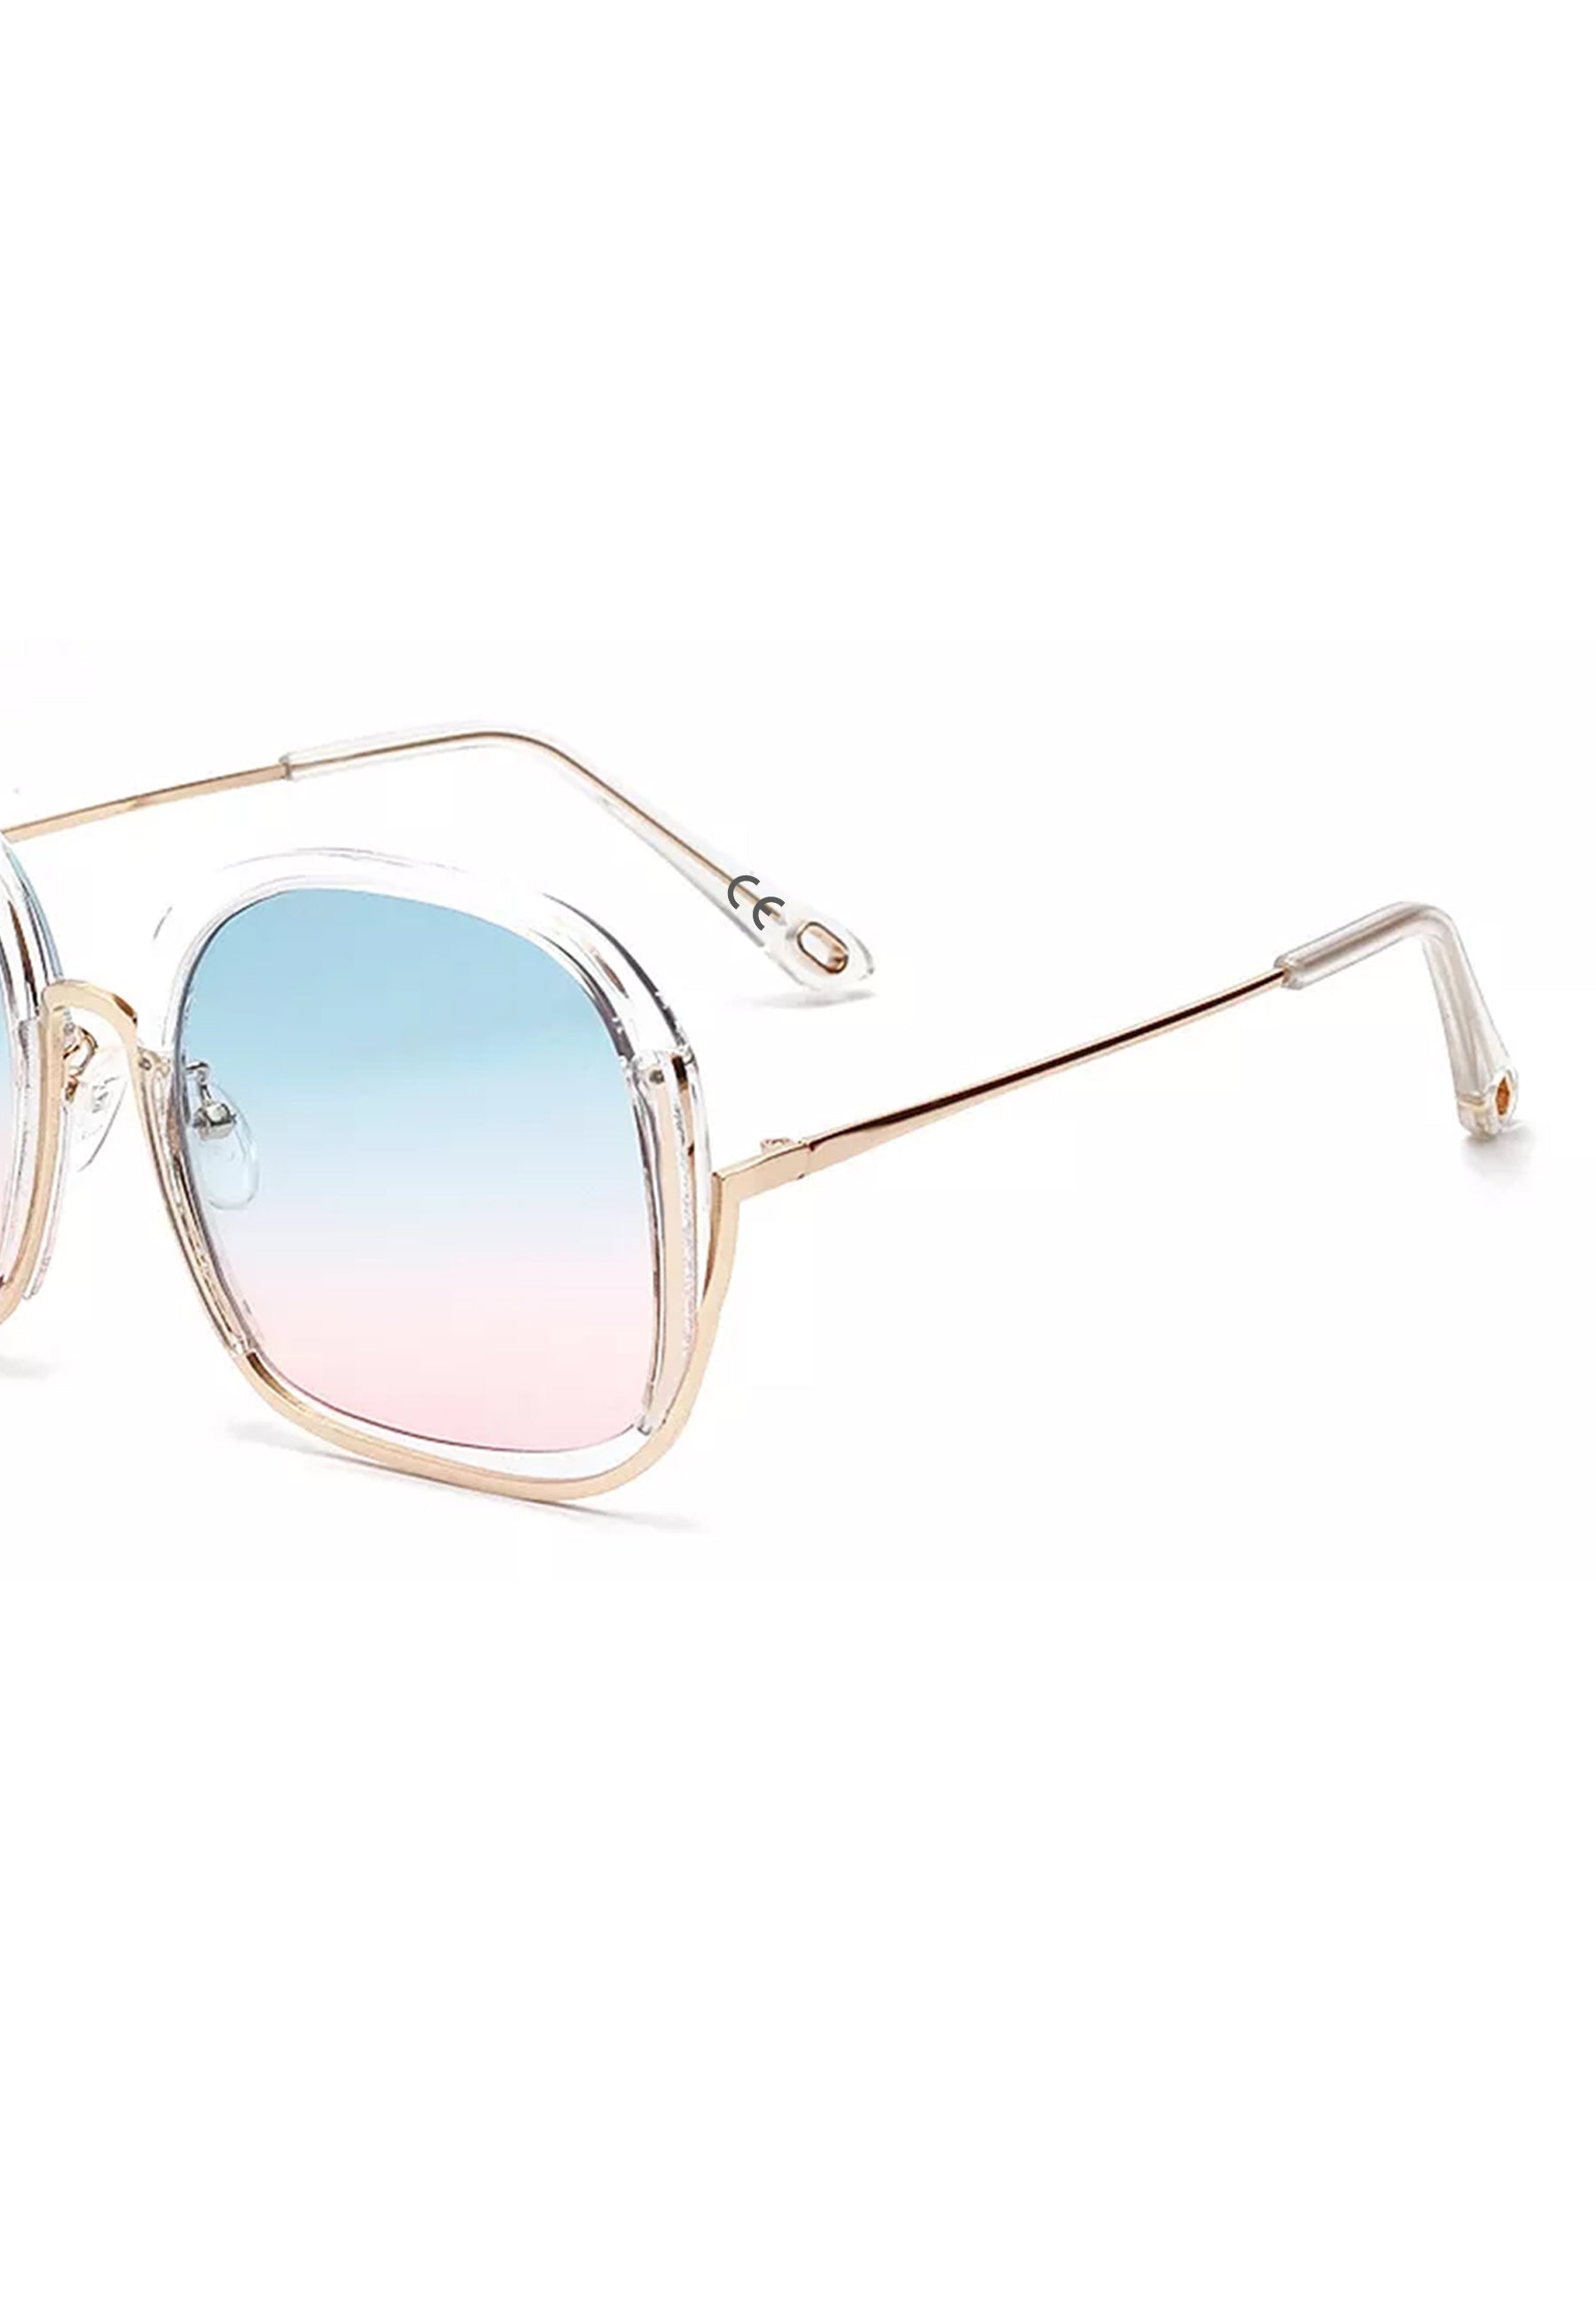 Avant-Garde Paris Square Shape Trendy Sunglasses